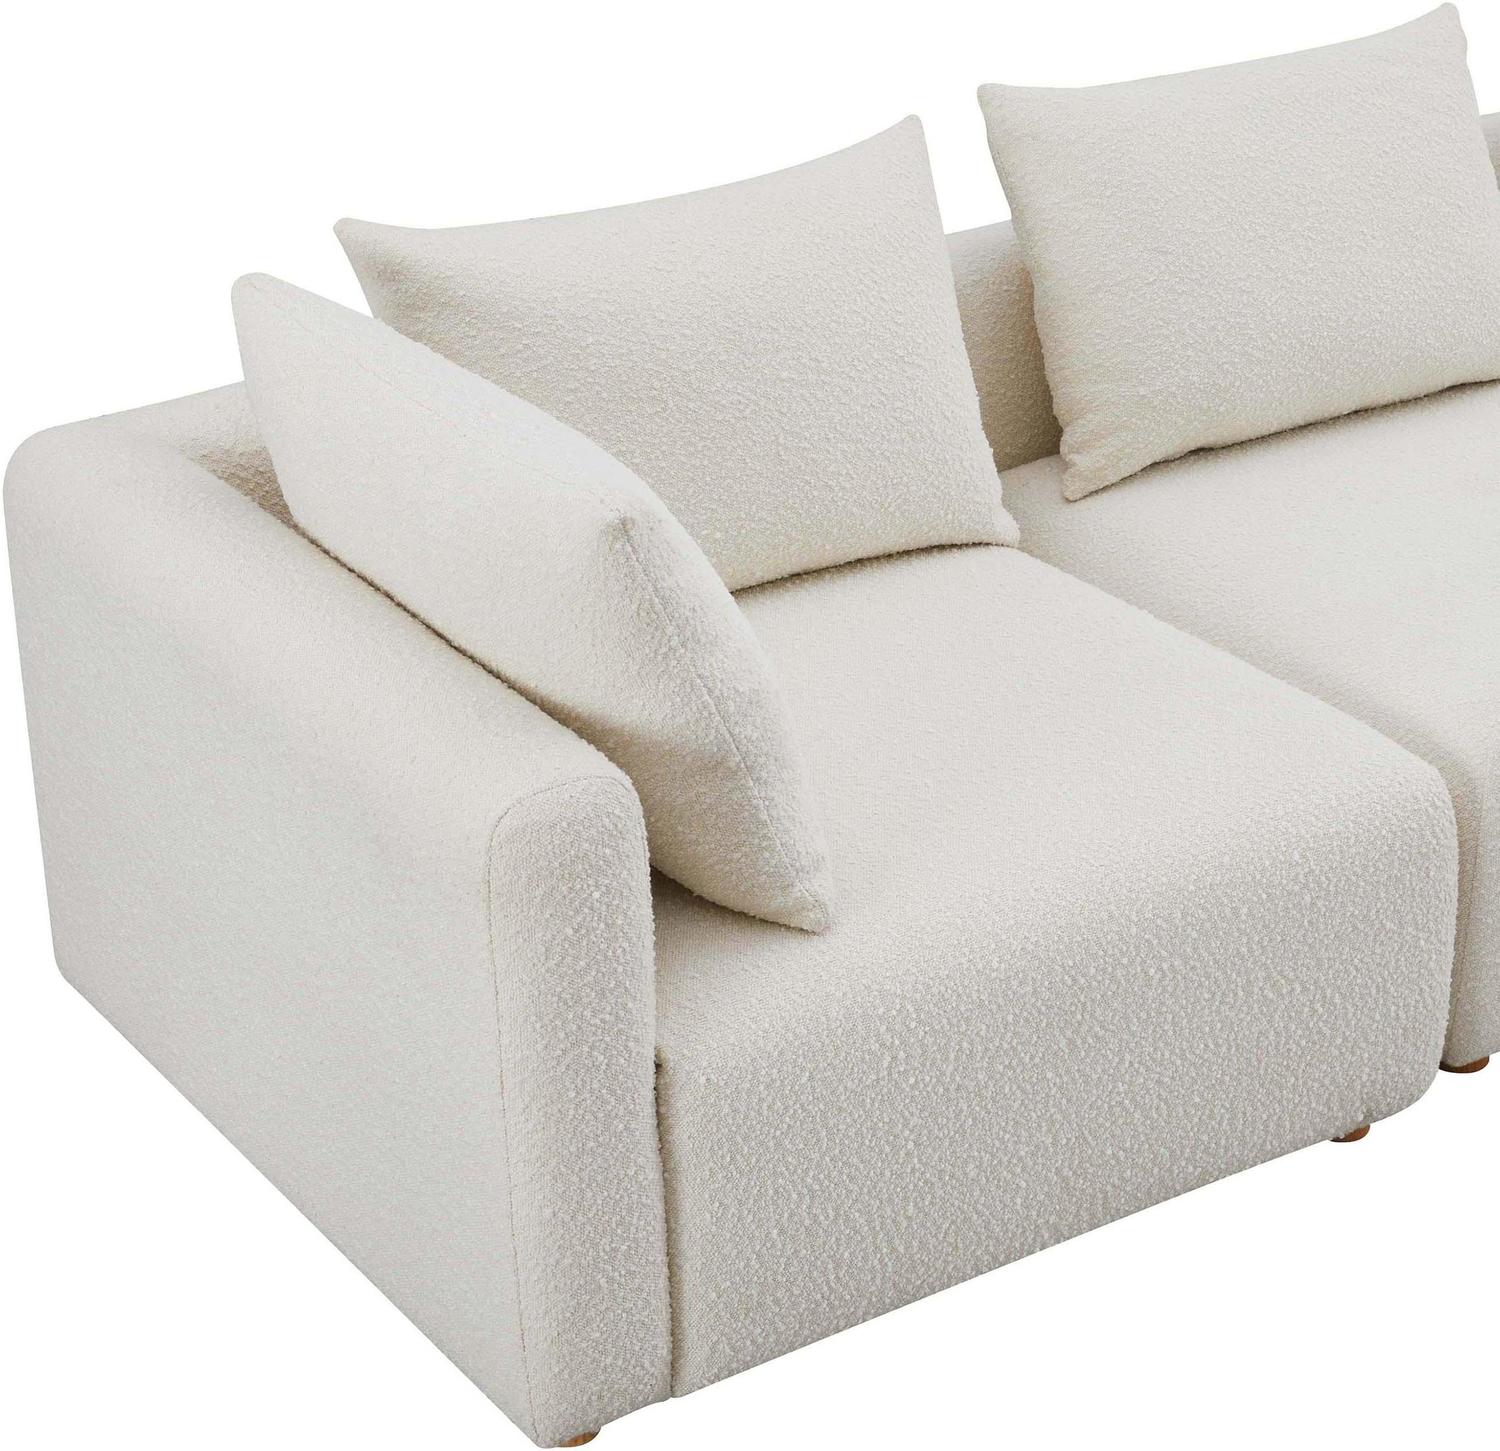 couches for sale black Contemporary Design Furniture Loveseats Cream